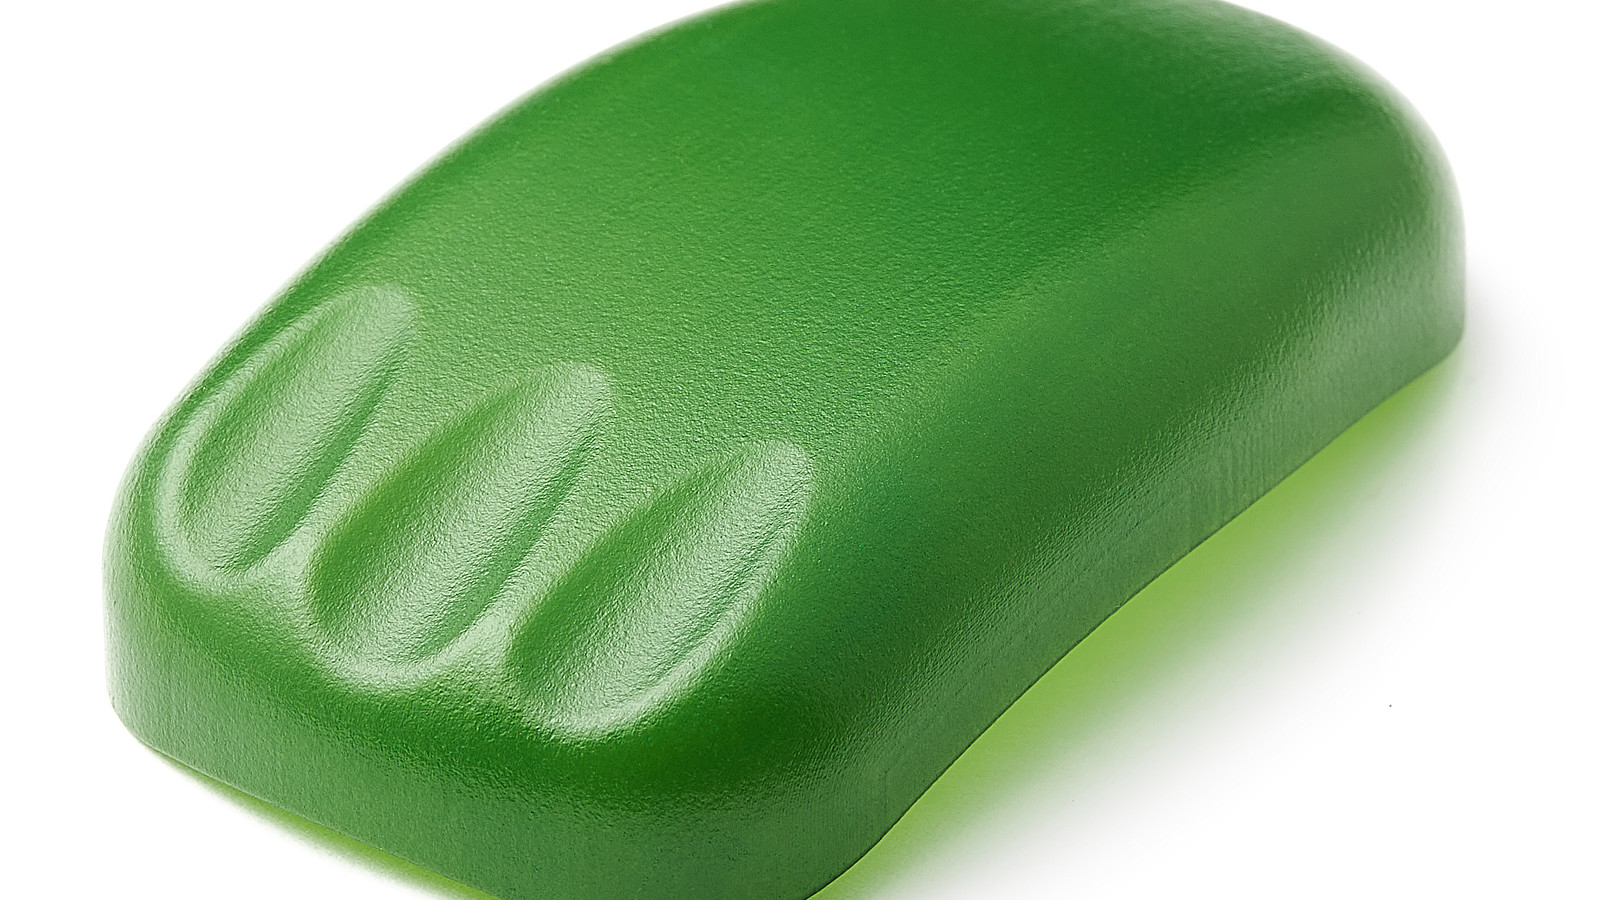 Green plastic mouse with 3 fingerprints